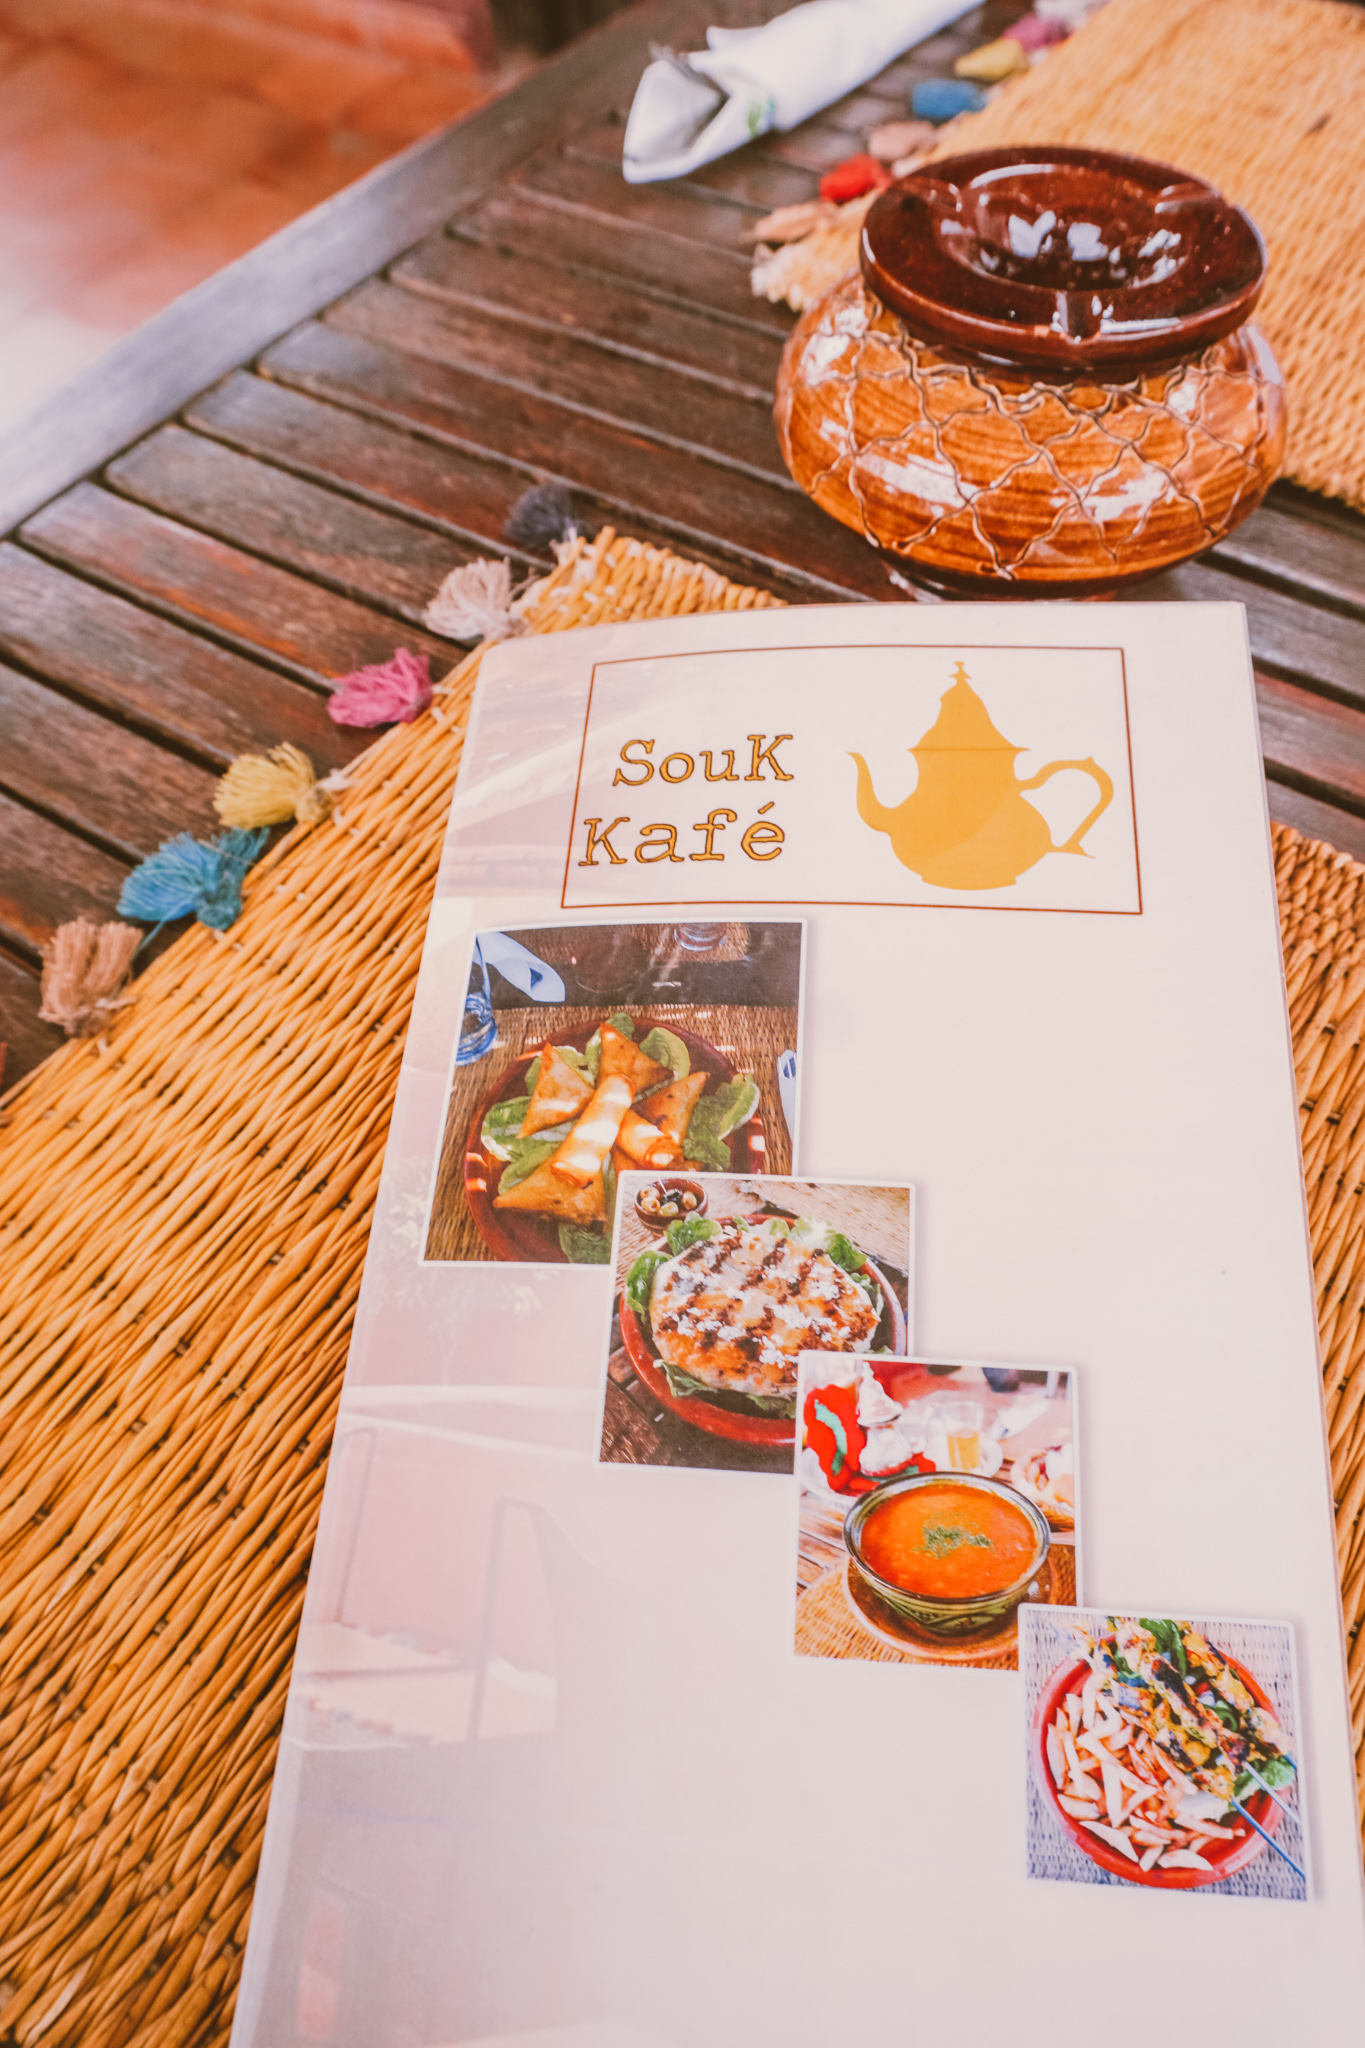 The Foodies Guide to Restaurants in Marrakech- Monique McHugh Blog